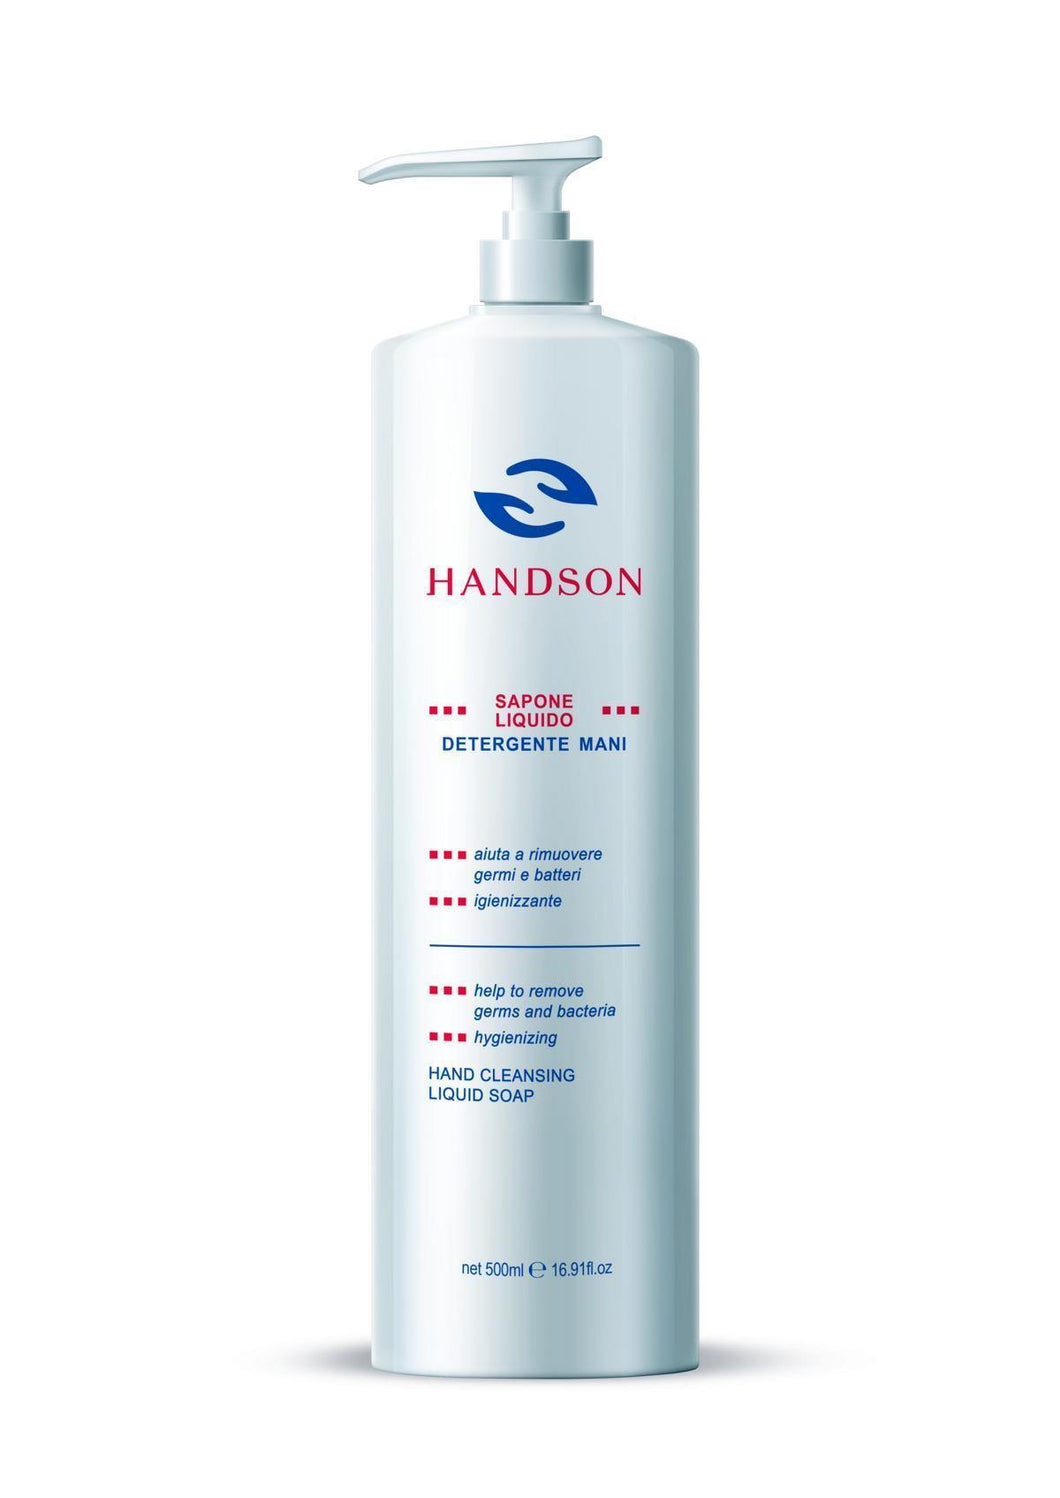 HANDSON HAND CLEANSING LIQUID SOAP Handseife- 500ml - Jean Paul Mynè Deutschland Vertrieb GmbH